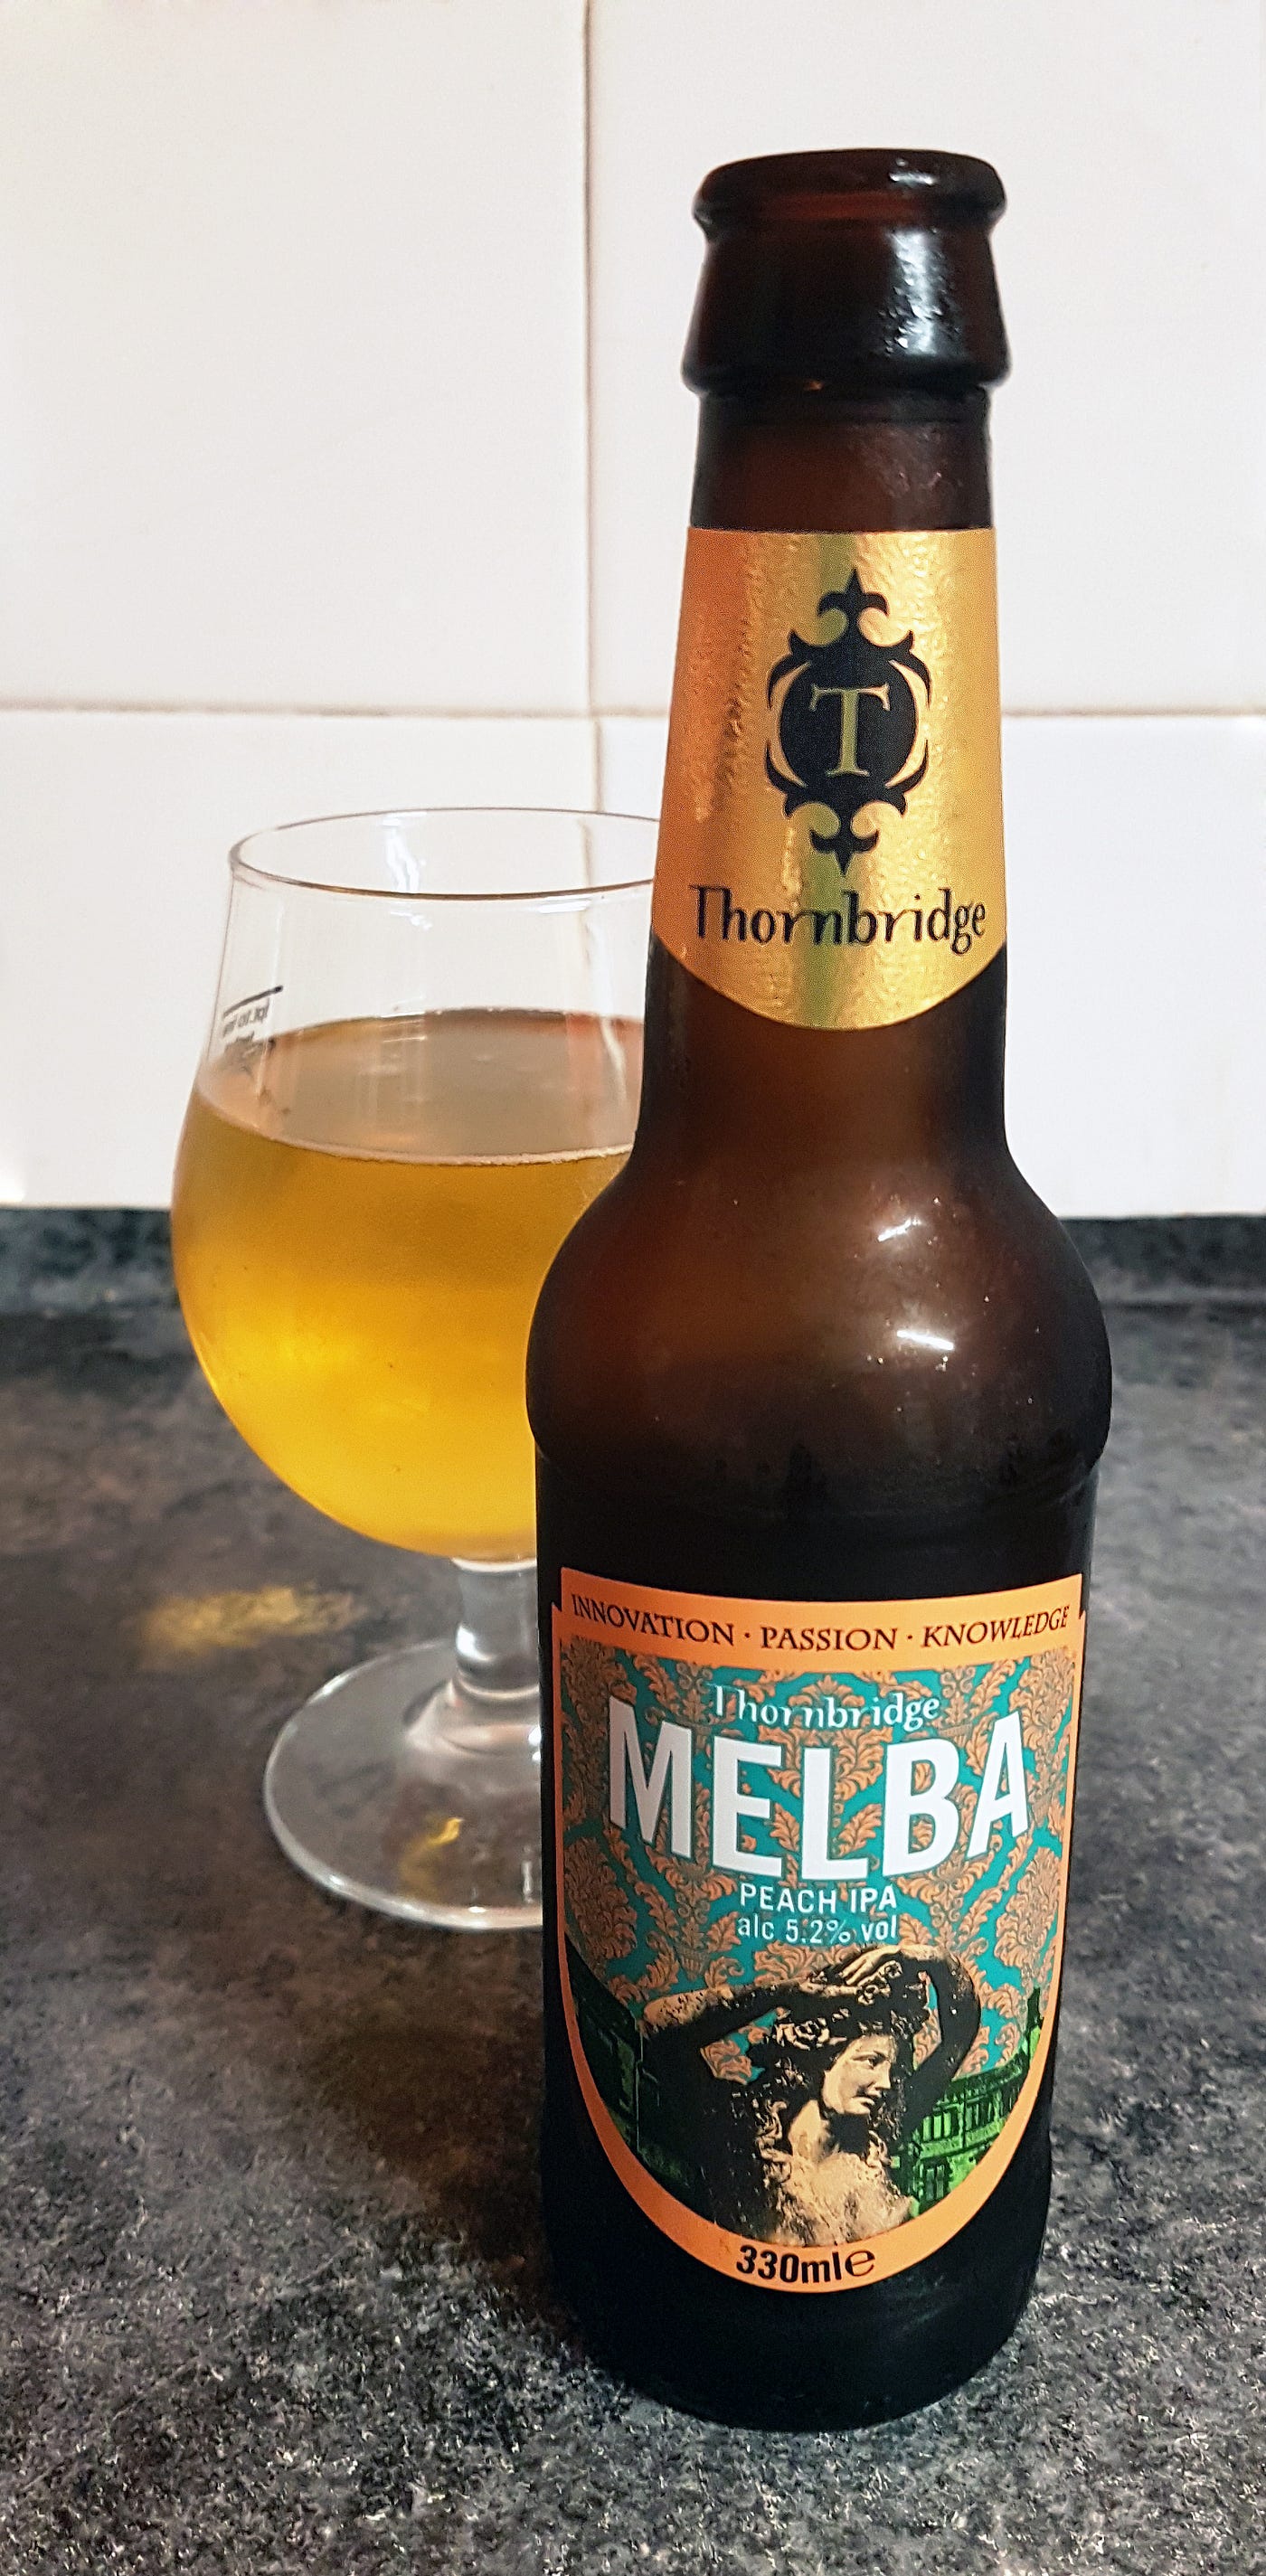 Thornbridge - Melba. Peach IPA 5.2%. A brewing marvel… | by theHopspotUK |  Medium